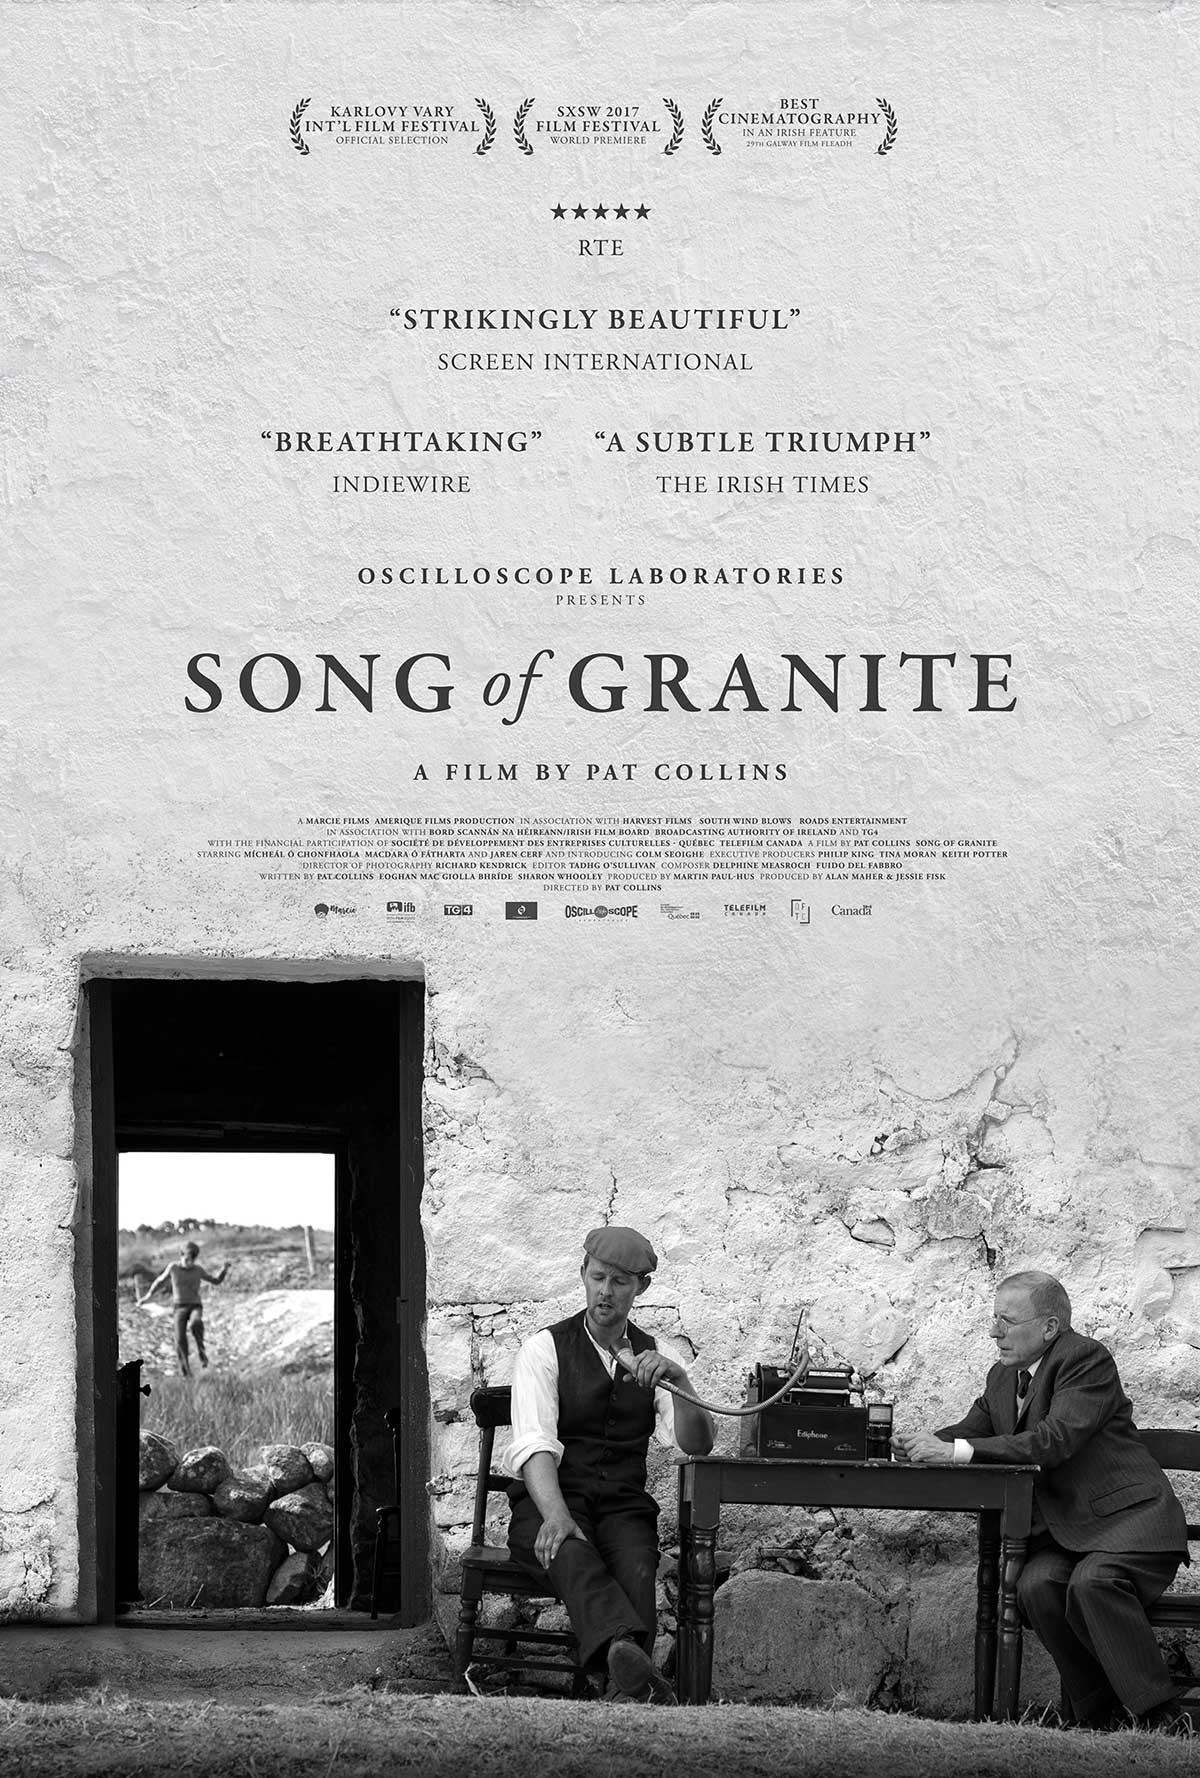 Nonton film Song of Granite layarkaca21 indoxx1 ganool online streaming terbaru